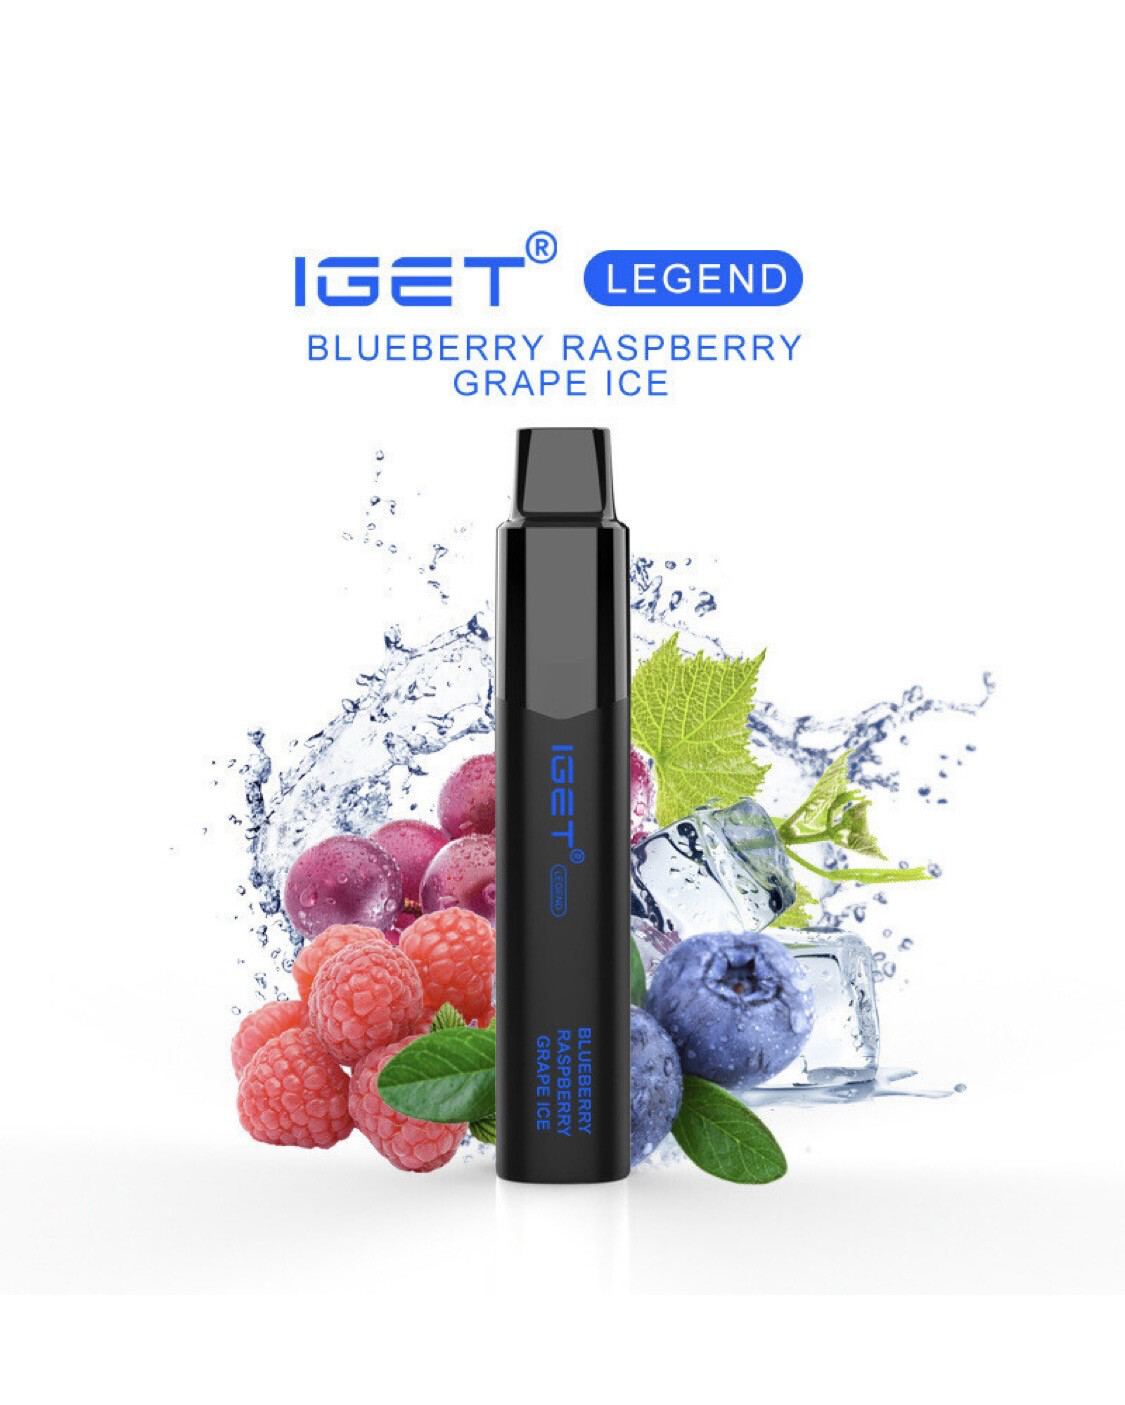 IGET LEGEND 4000 - Blueberry Raspberry Grape Ice